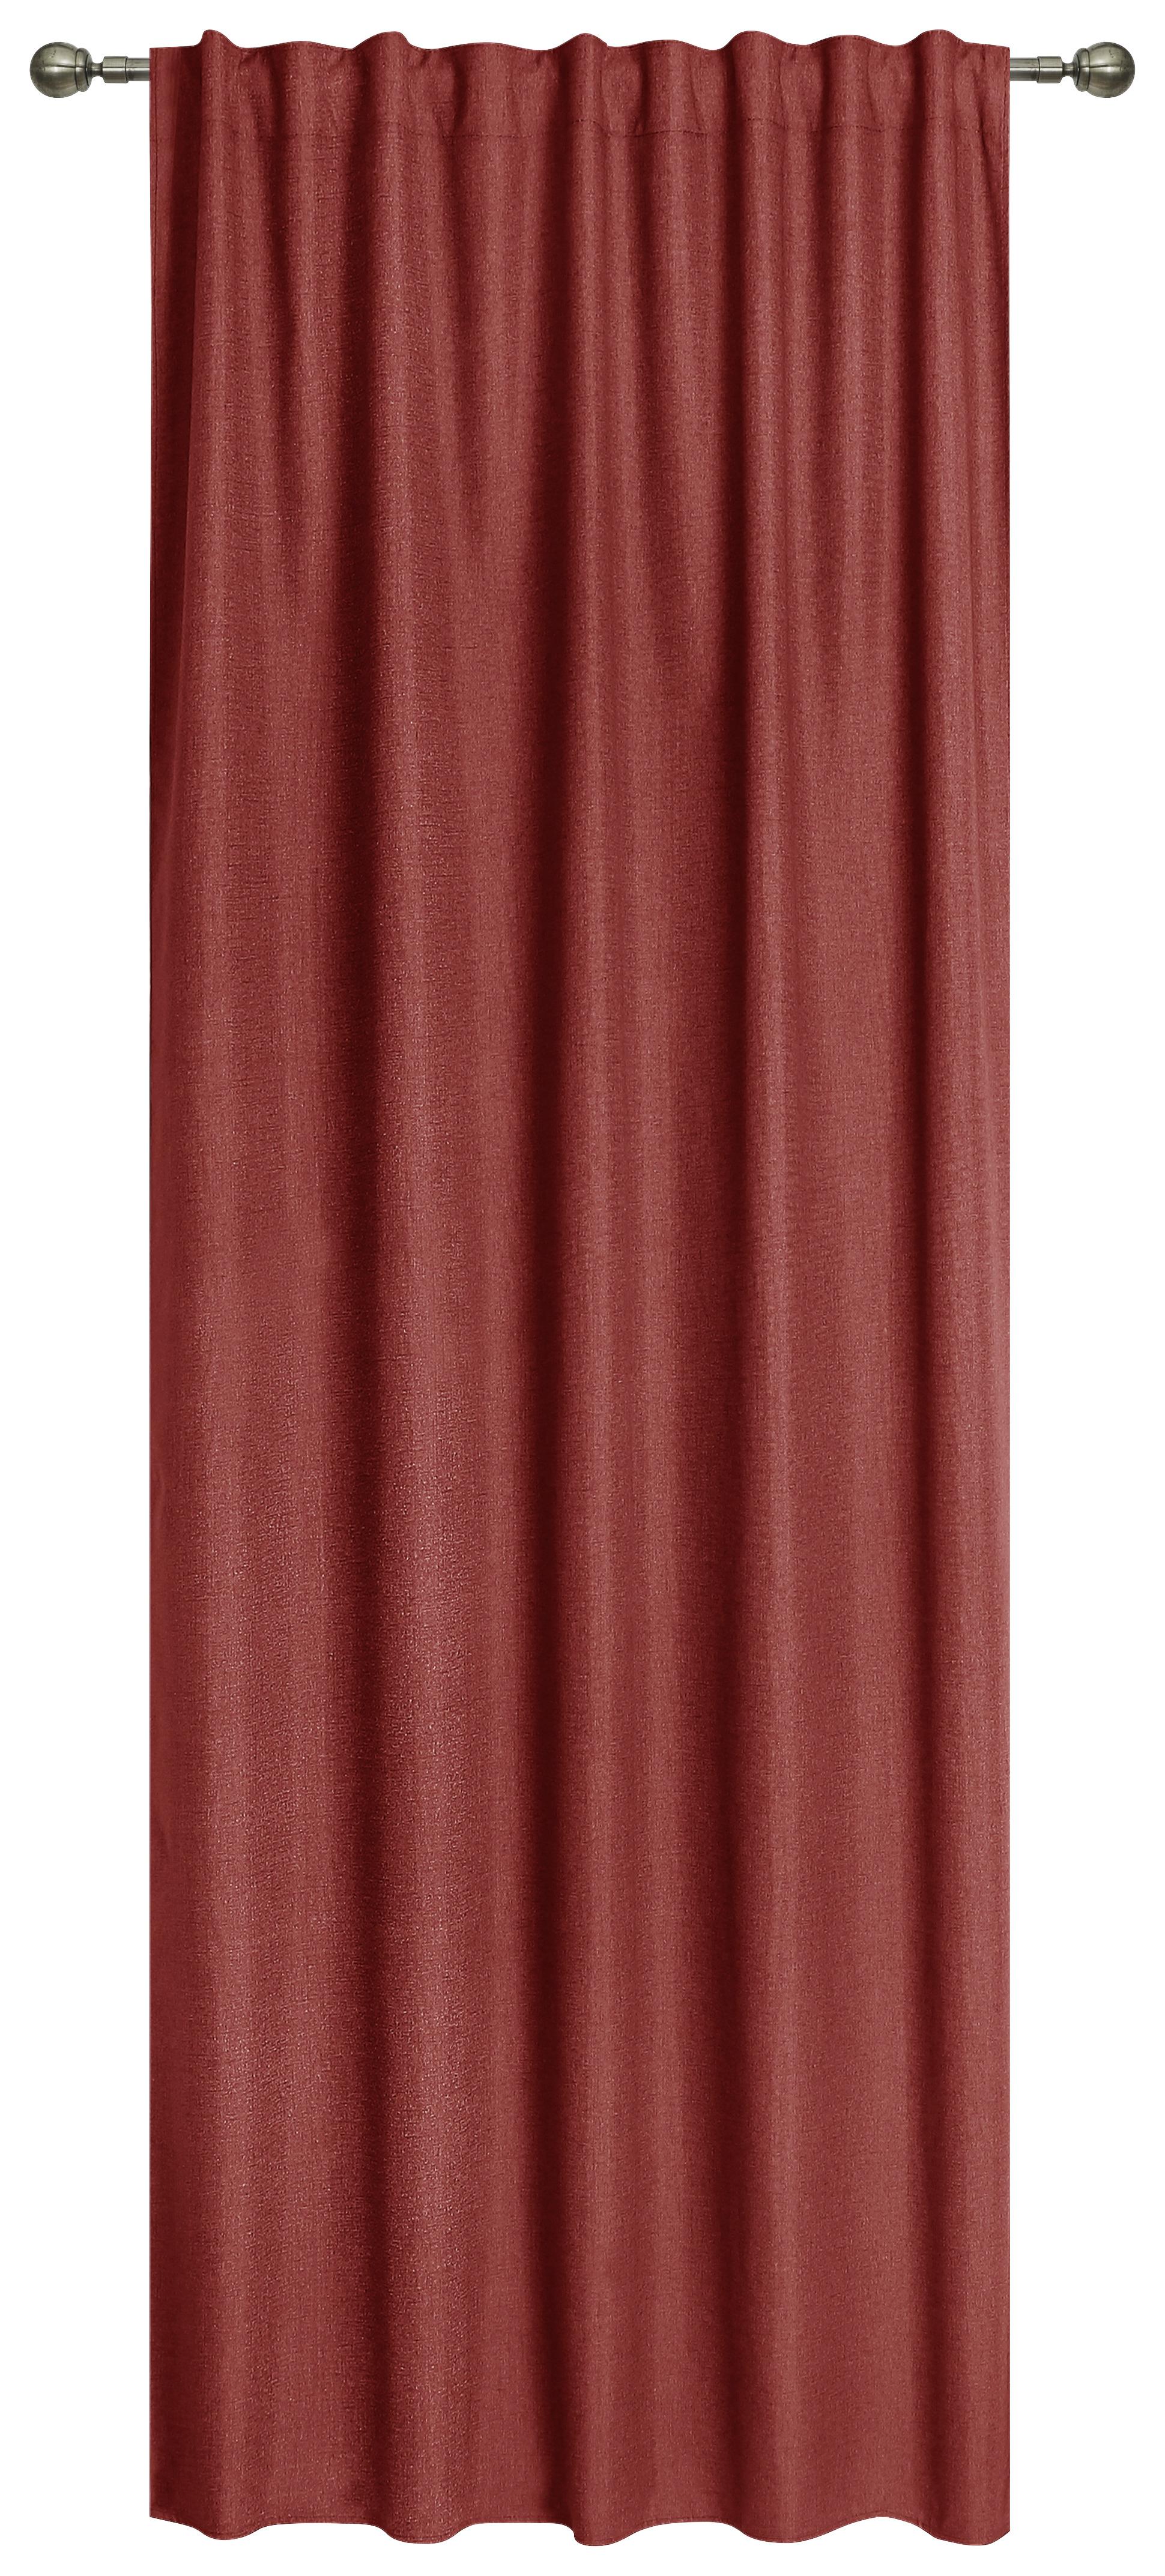 Vorhang Mit Ösen und Band Ohio 140x245 cm Rot - Rot, ROMANTIK / LANDHAUS, Textil (140/245cm) - James Wood